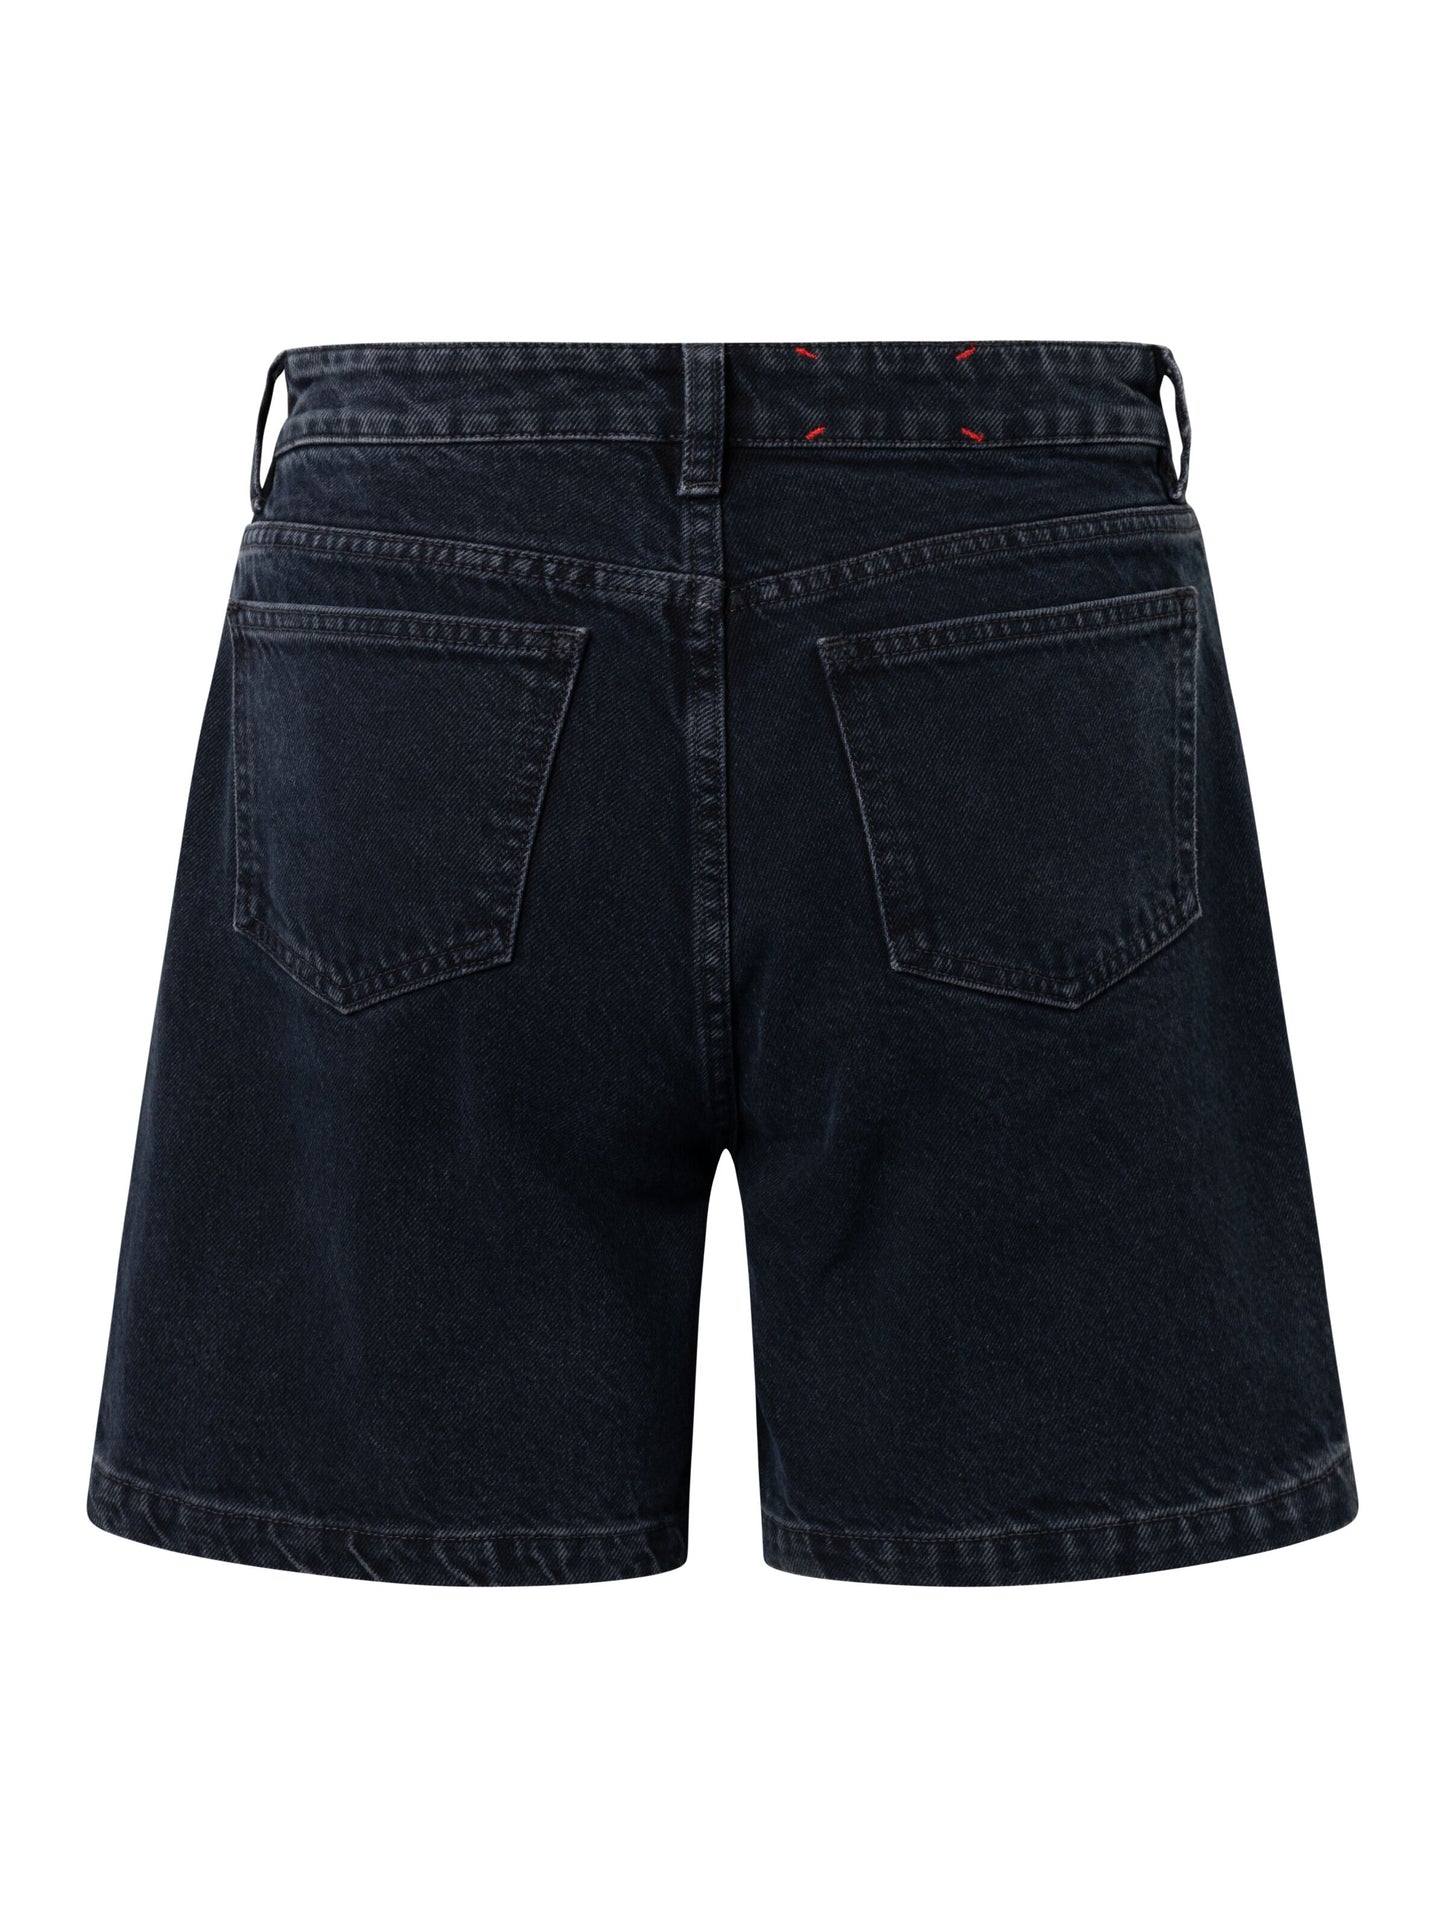 KCA - REBORN™ GALE straight mid-rise overdyed black 5-pocket shorts GRS/Vegan PETA Overdyed Black